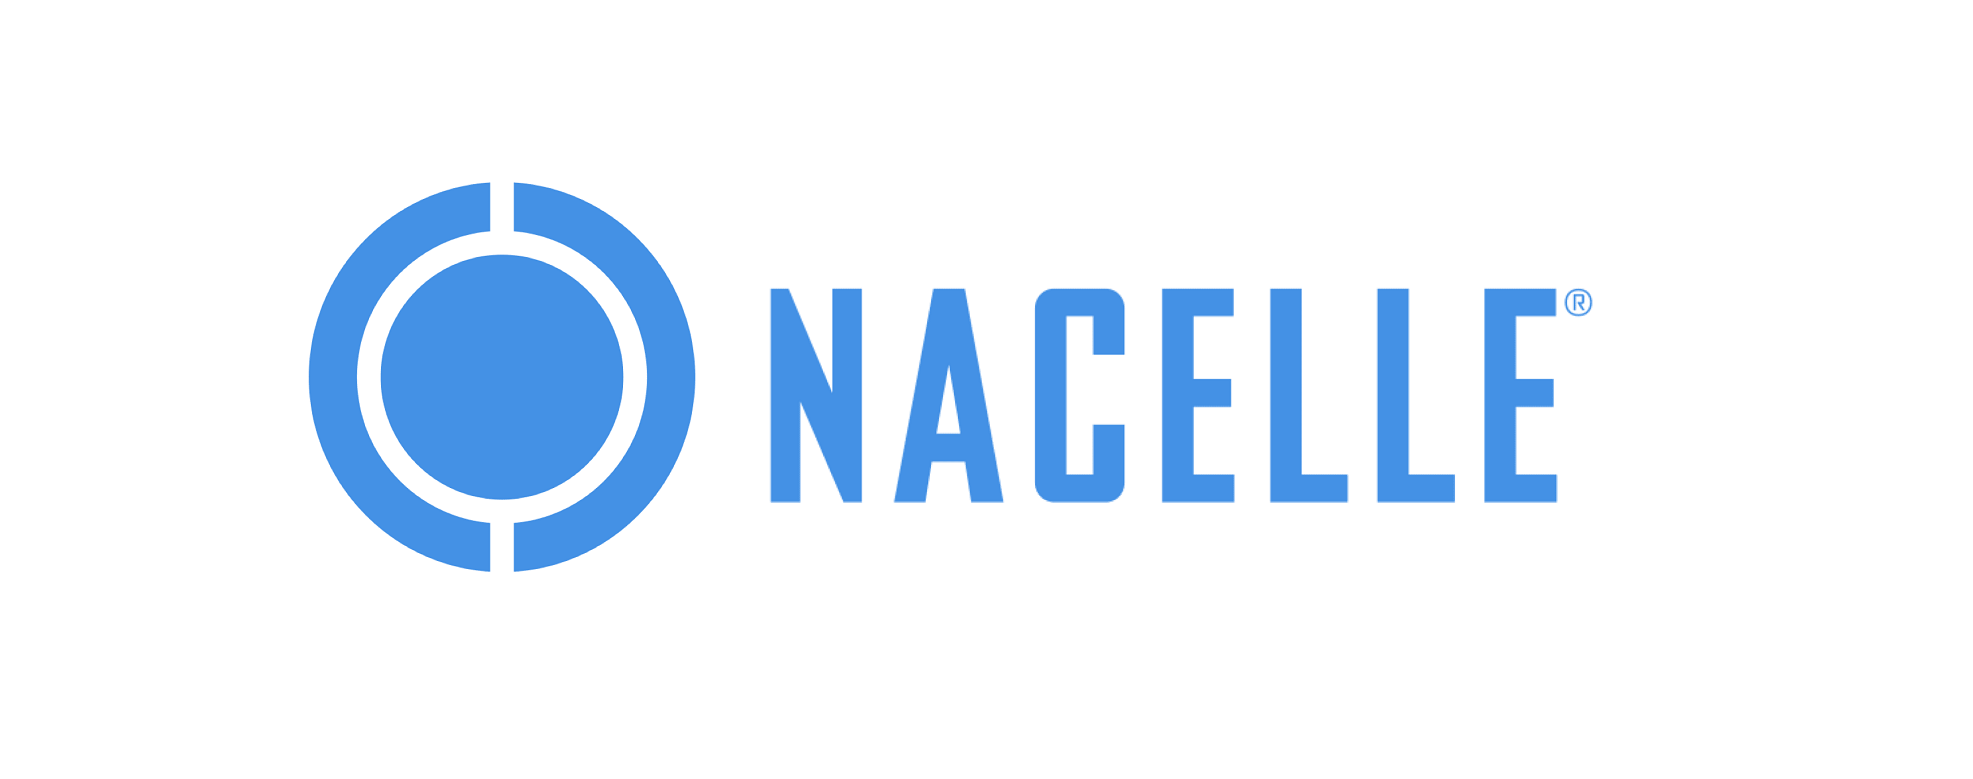 The Nacelle Company